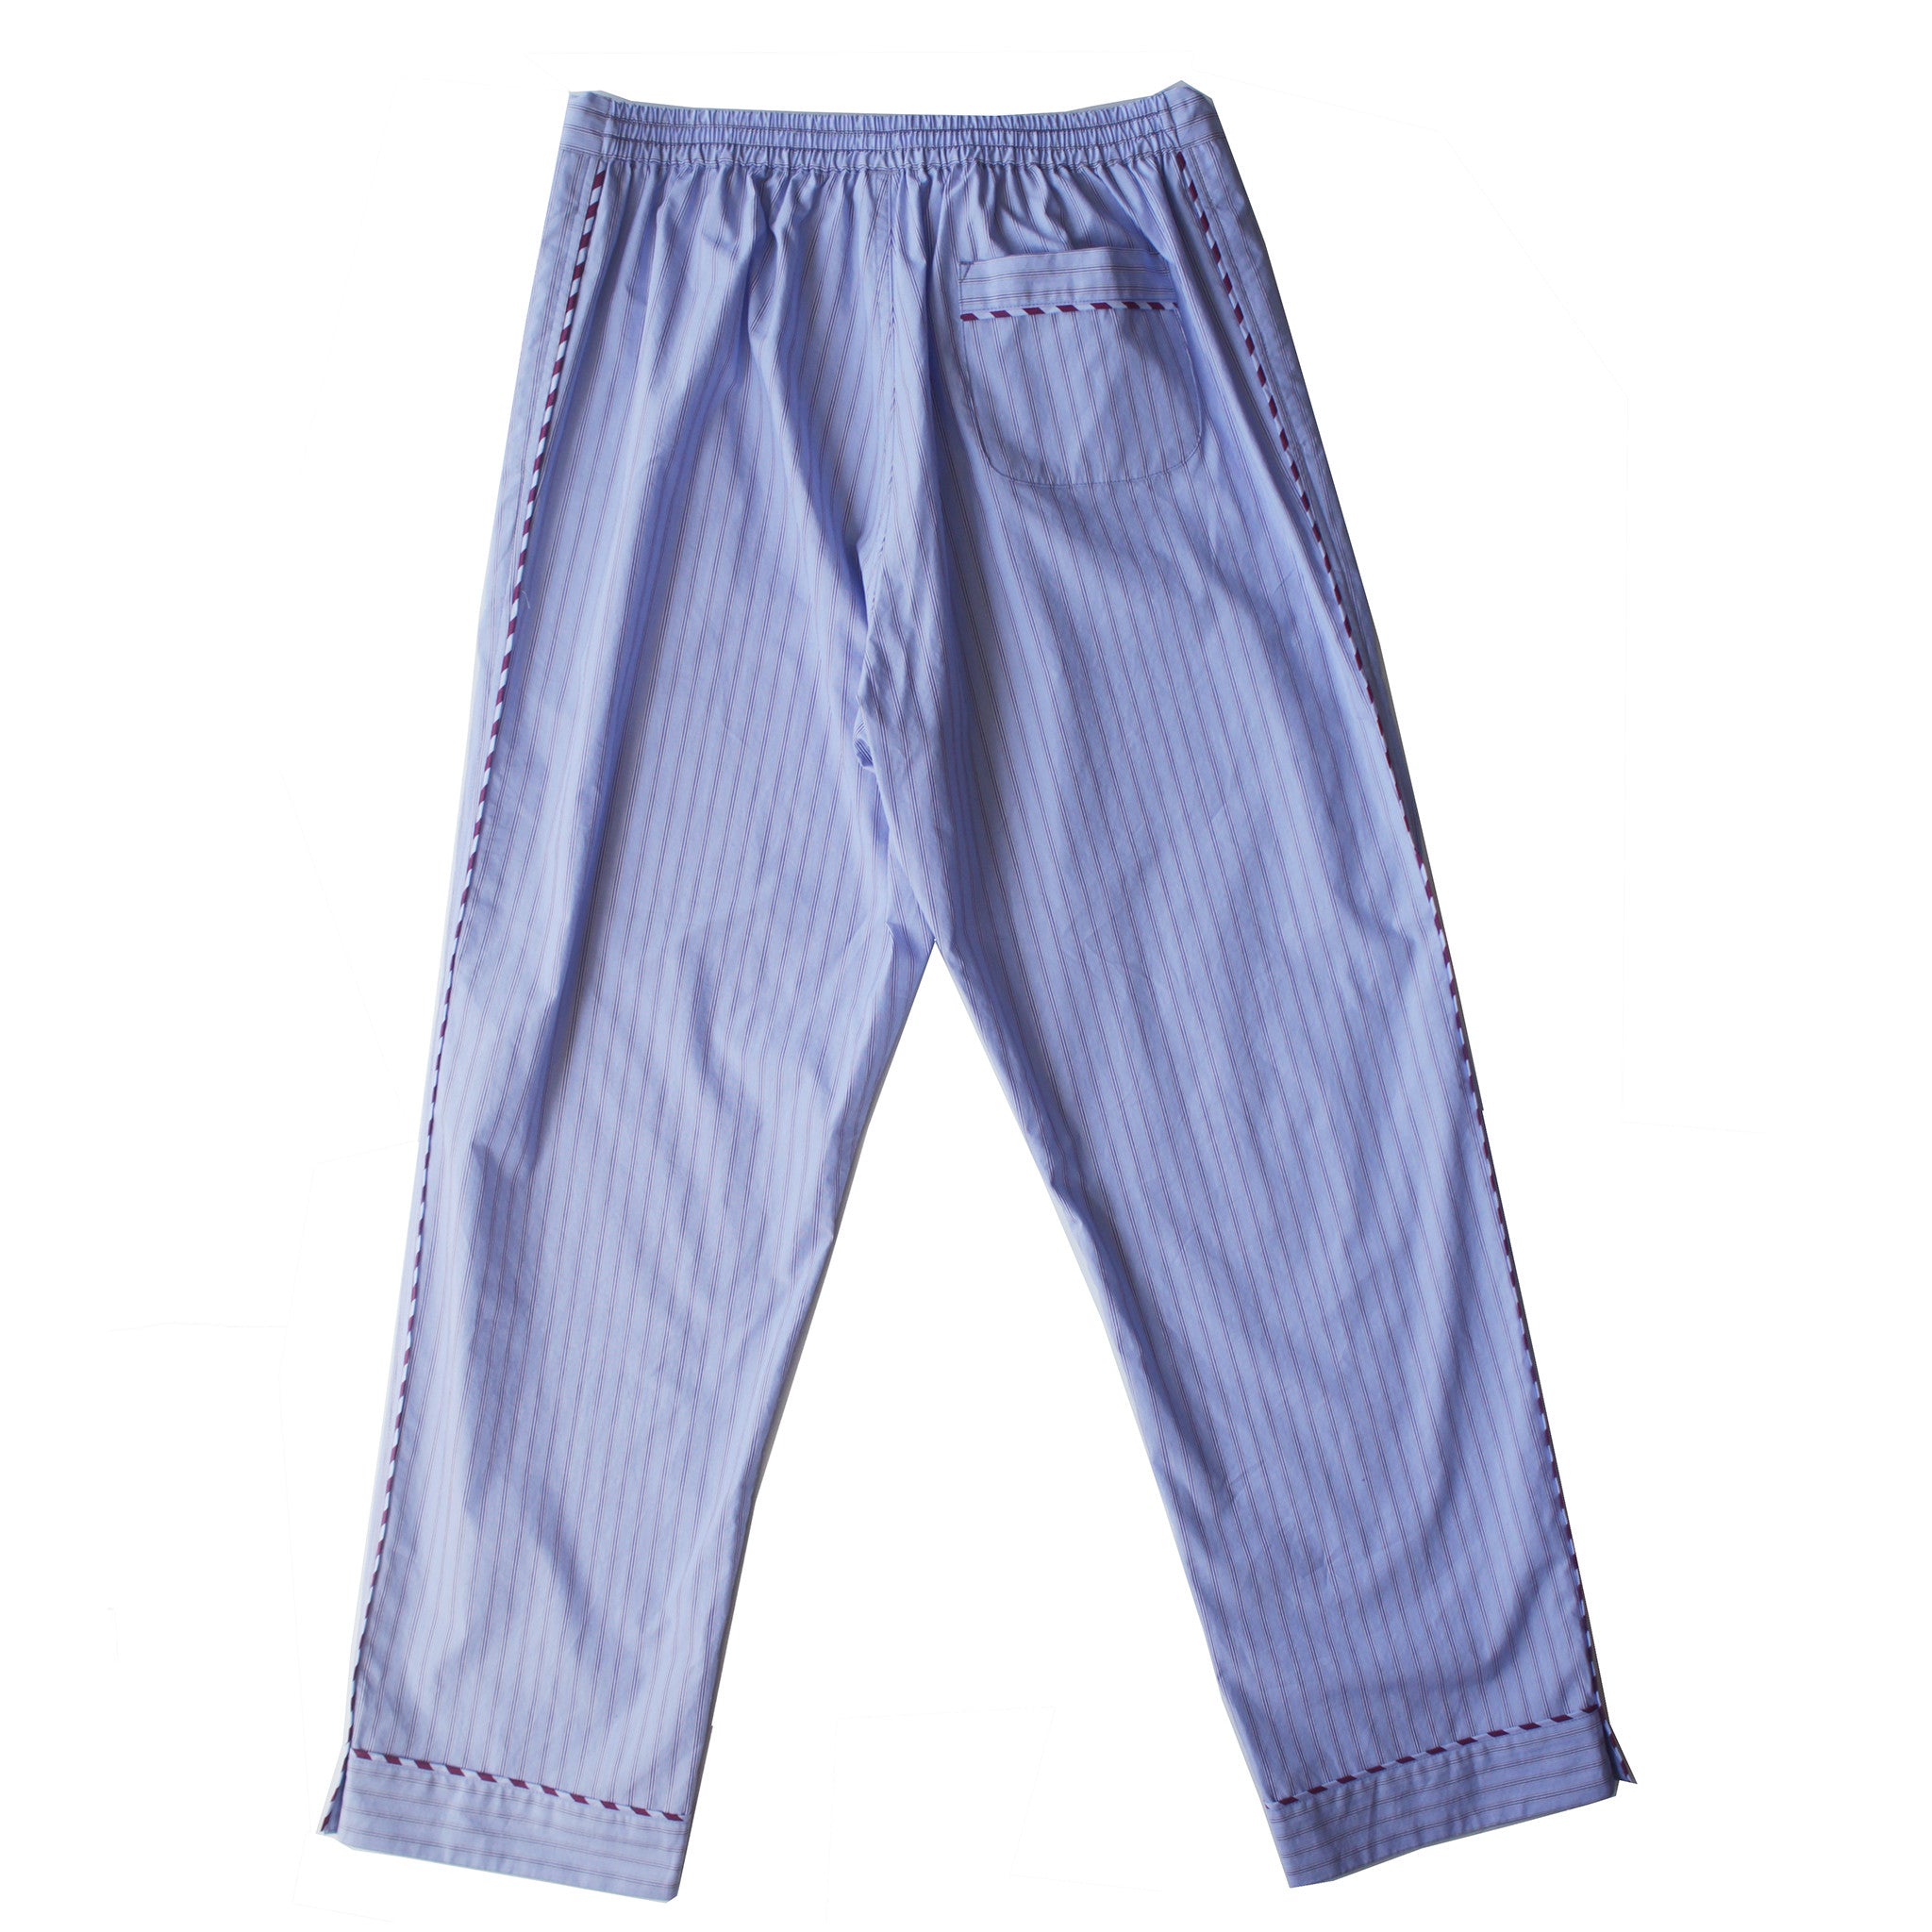 Saturn Pajama Pant in Light Blue Stripe Italian Cotton